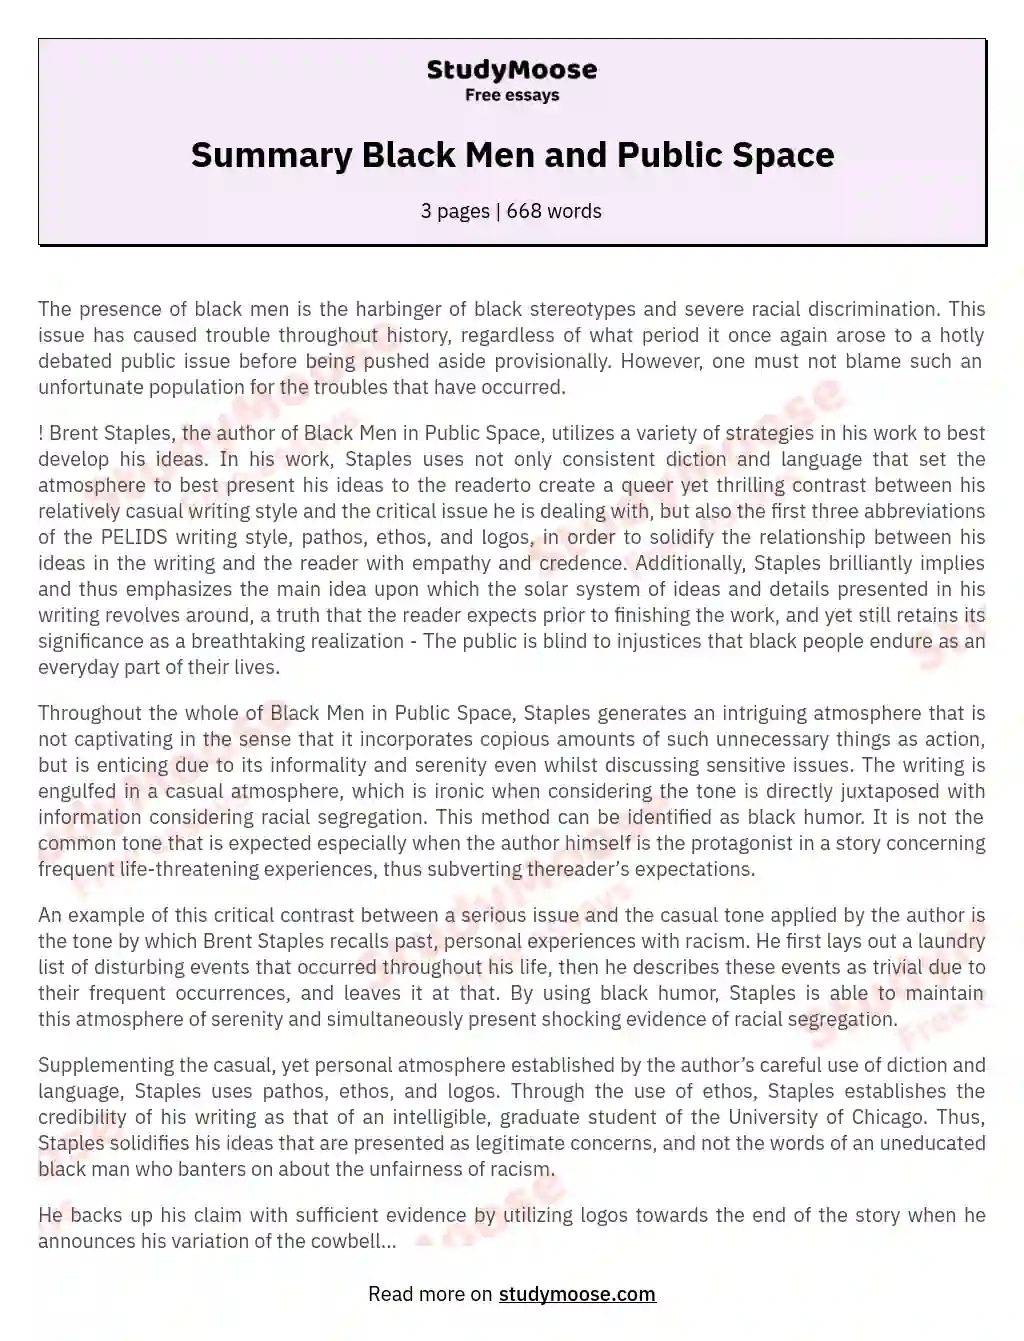 Summary Black Men and Public Space essay